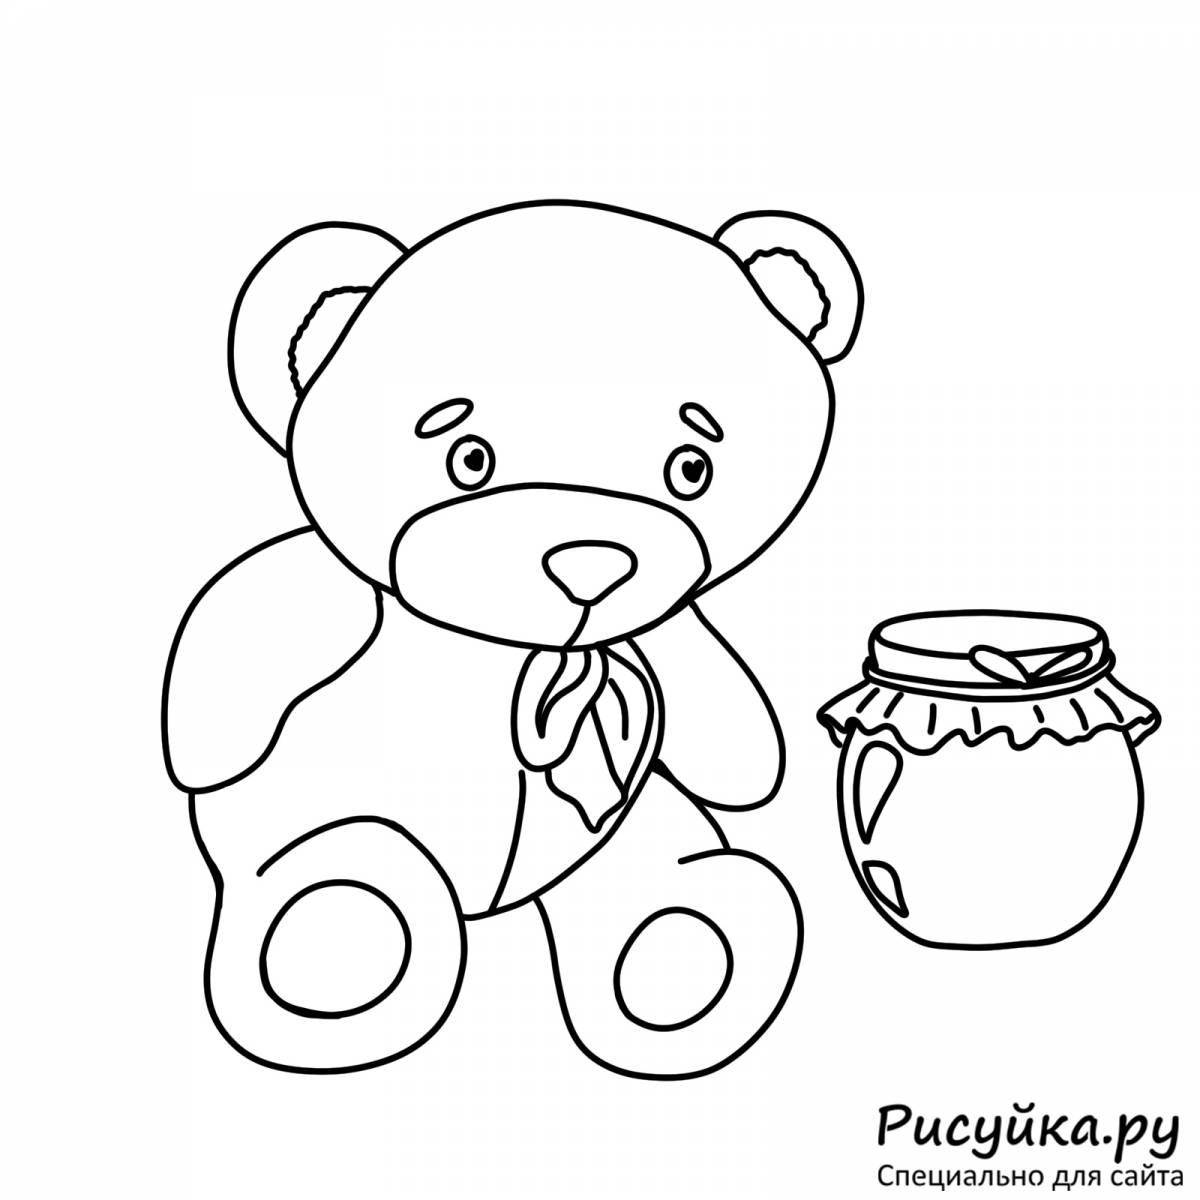 Adorable teddy bear with honey coloring book